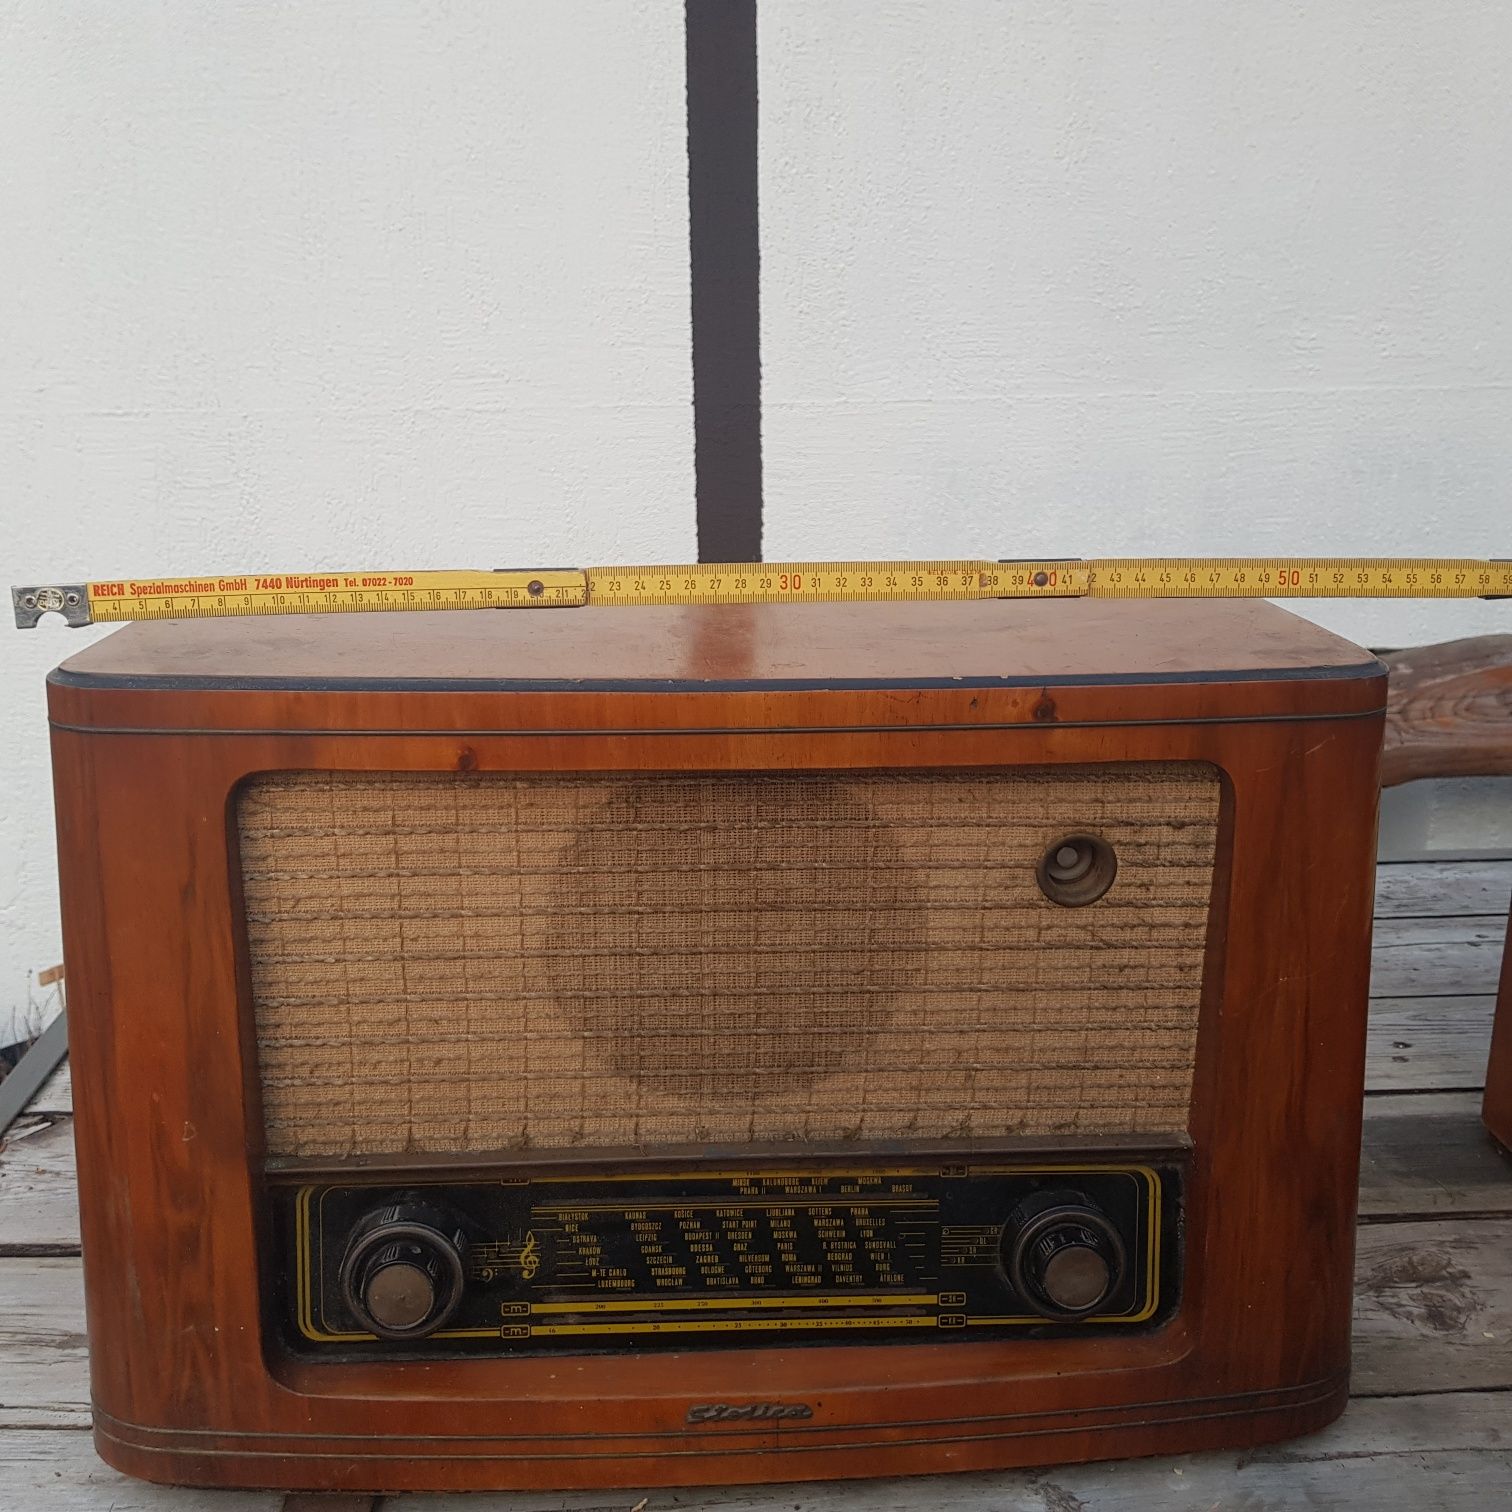 Stare radio, lampowe